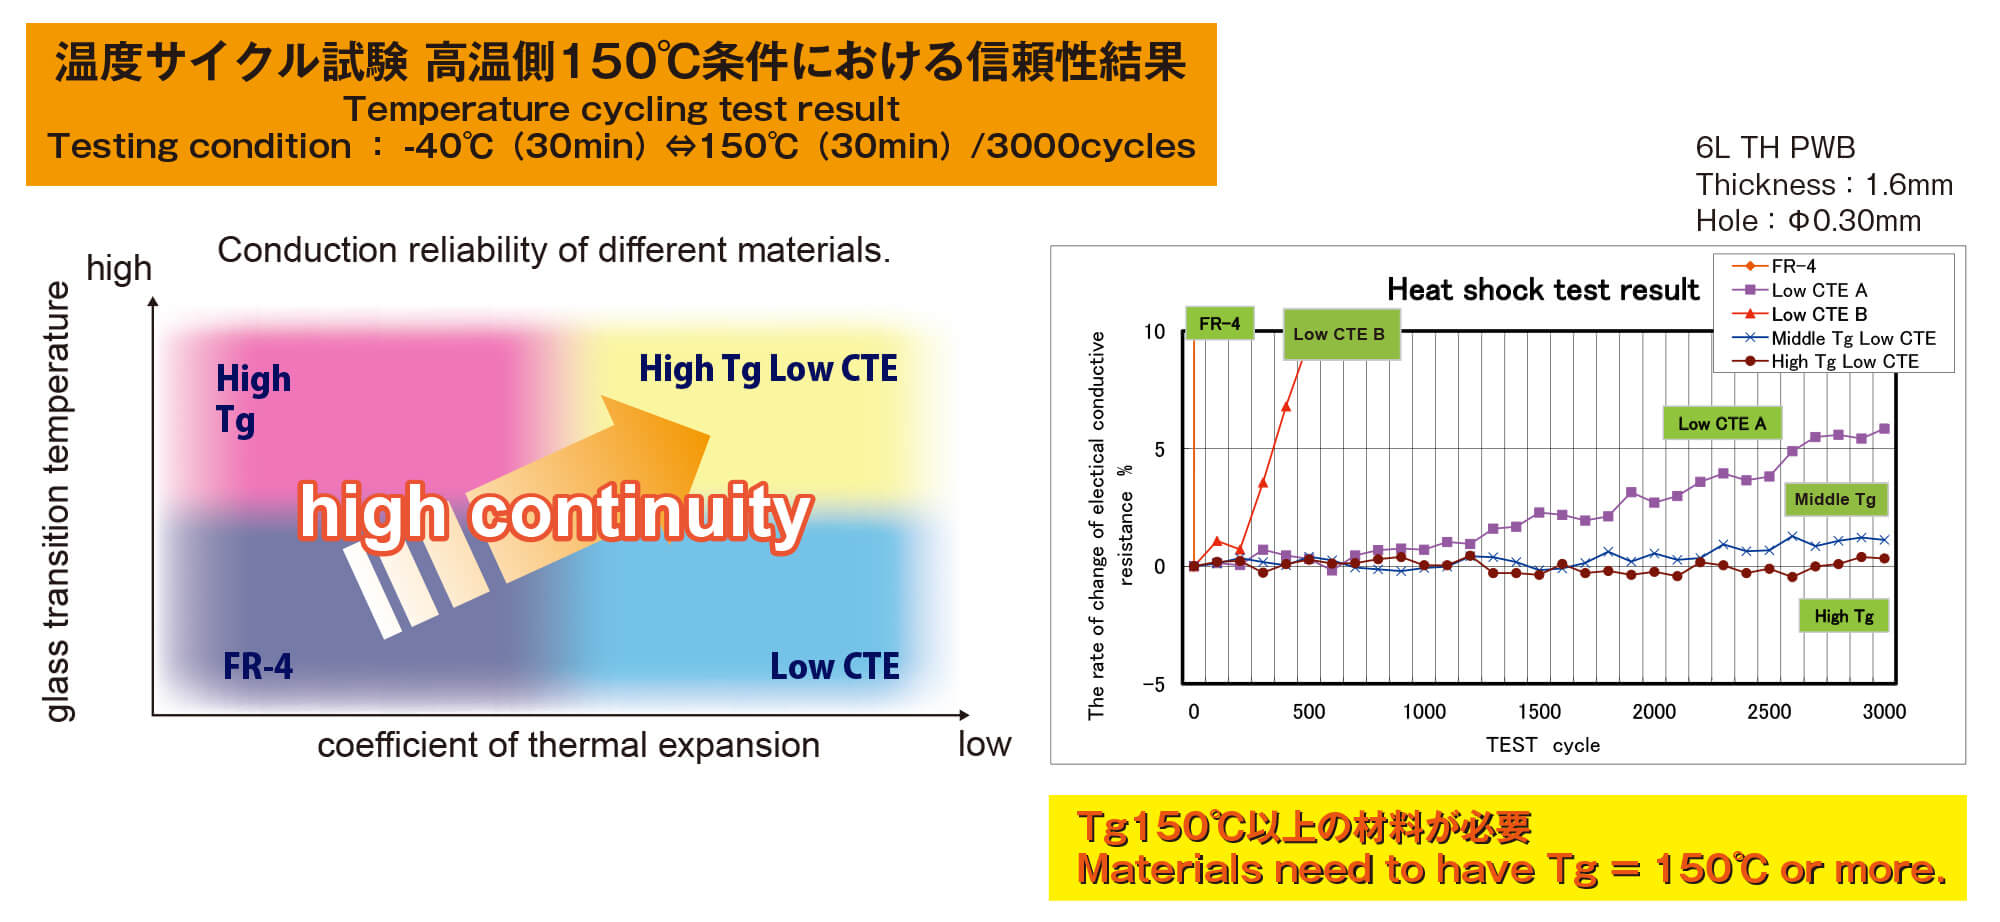 Temperature cycling test result. testing condition: -40 ºC(30min) ⇔ 150 ºC(30min) / 3000cycles